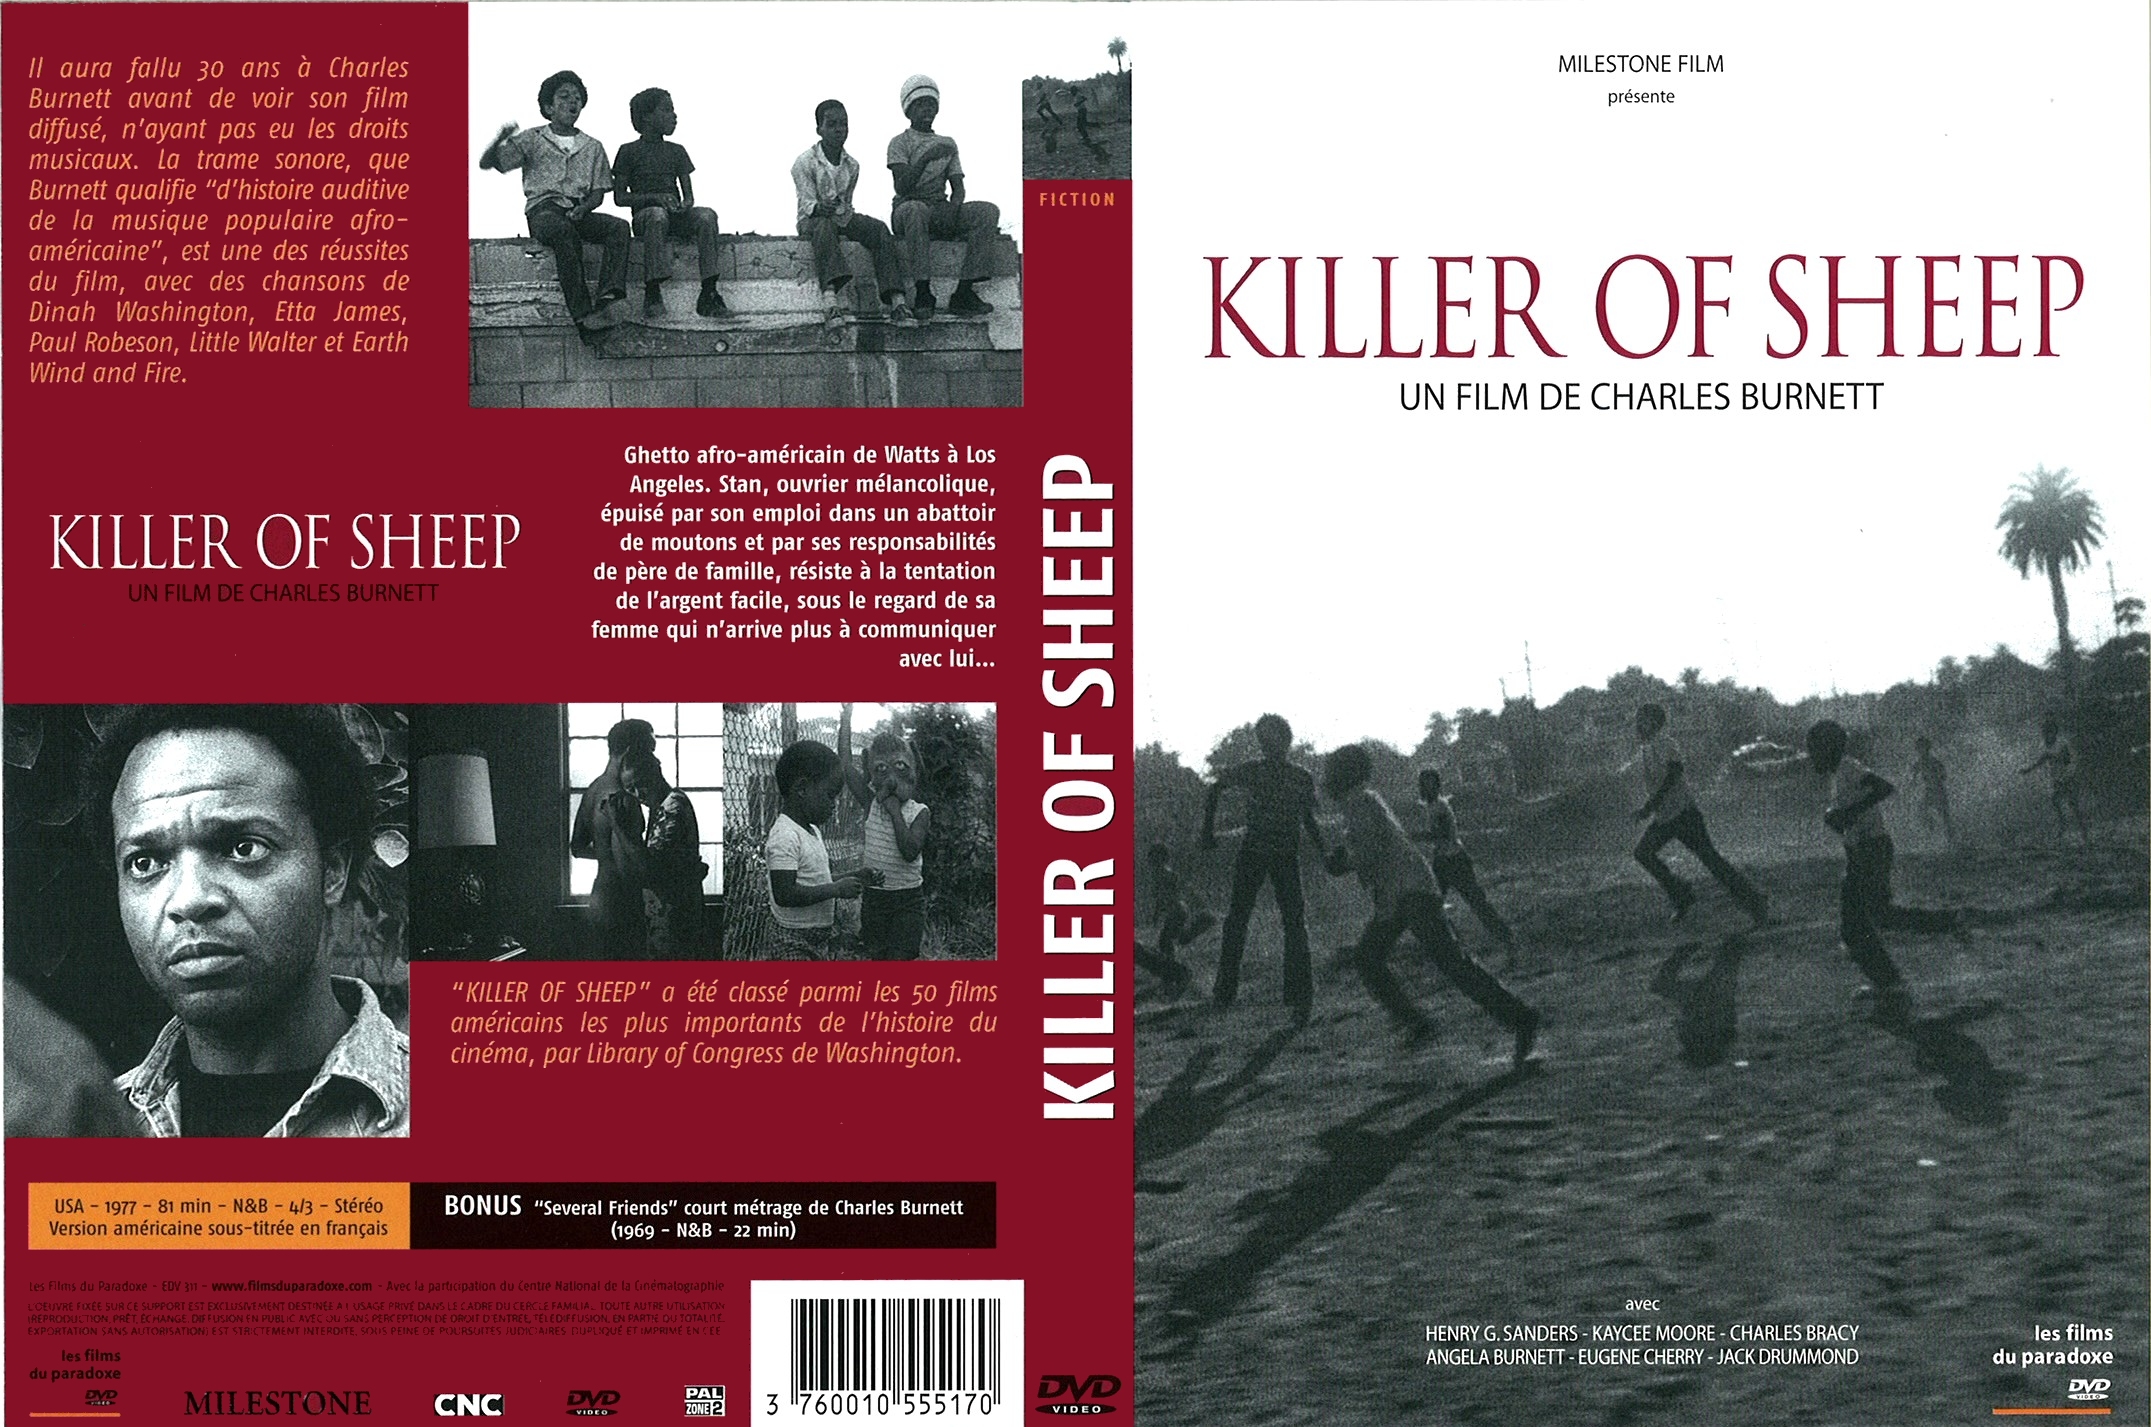 Jaquette DVD Killer of sheep